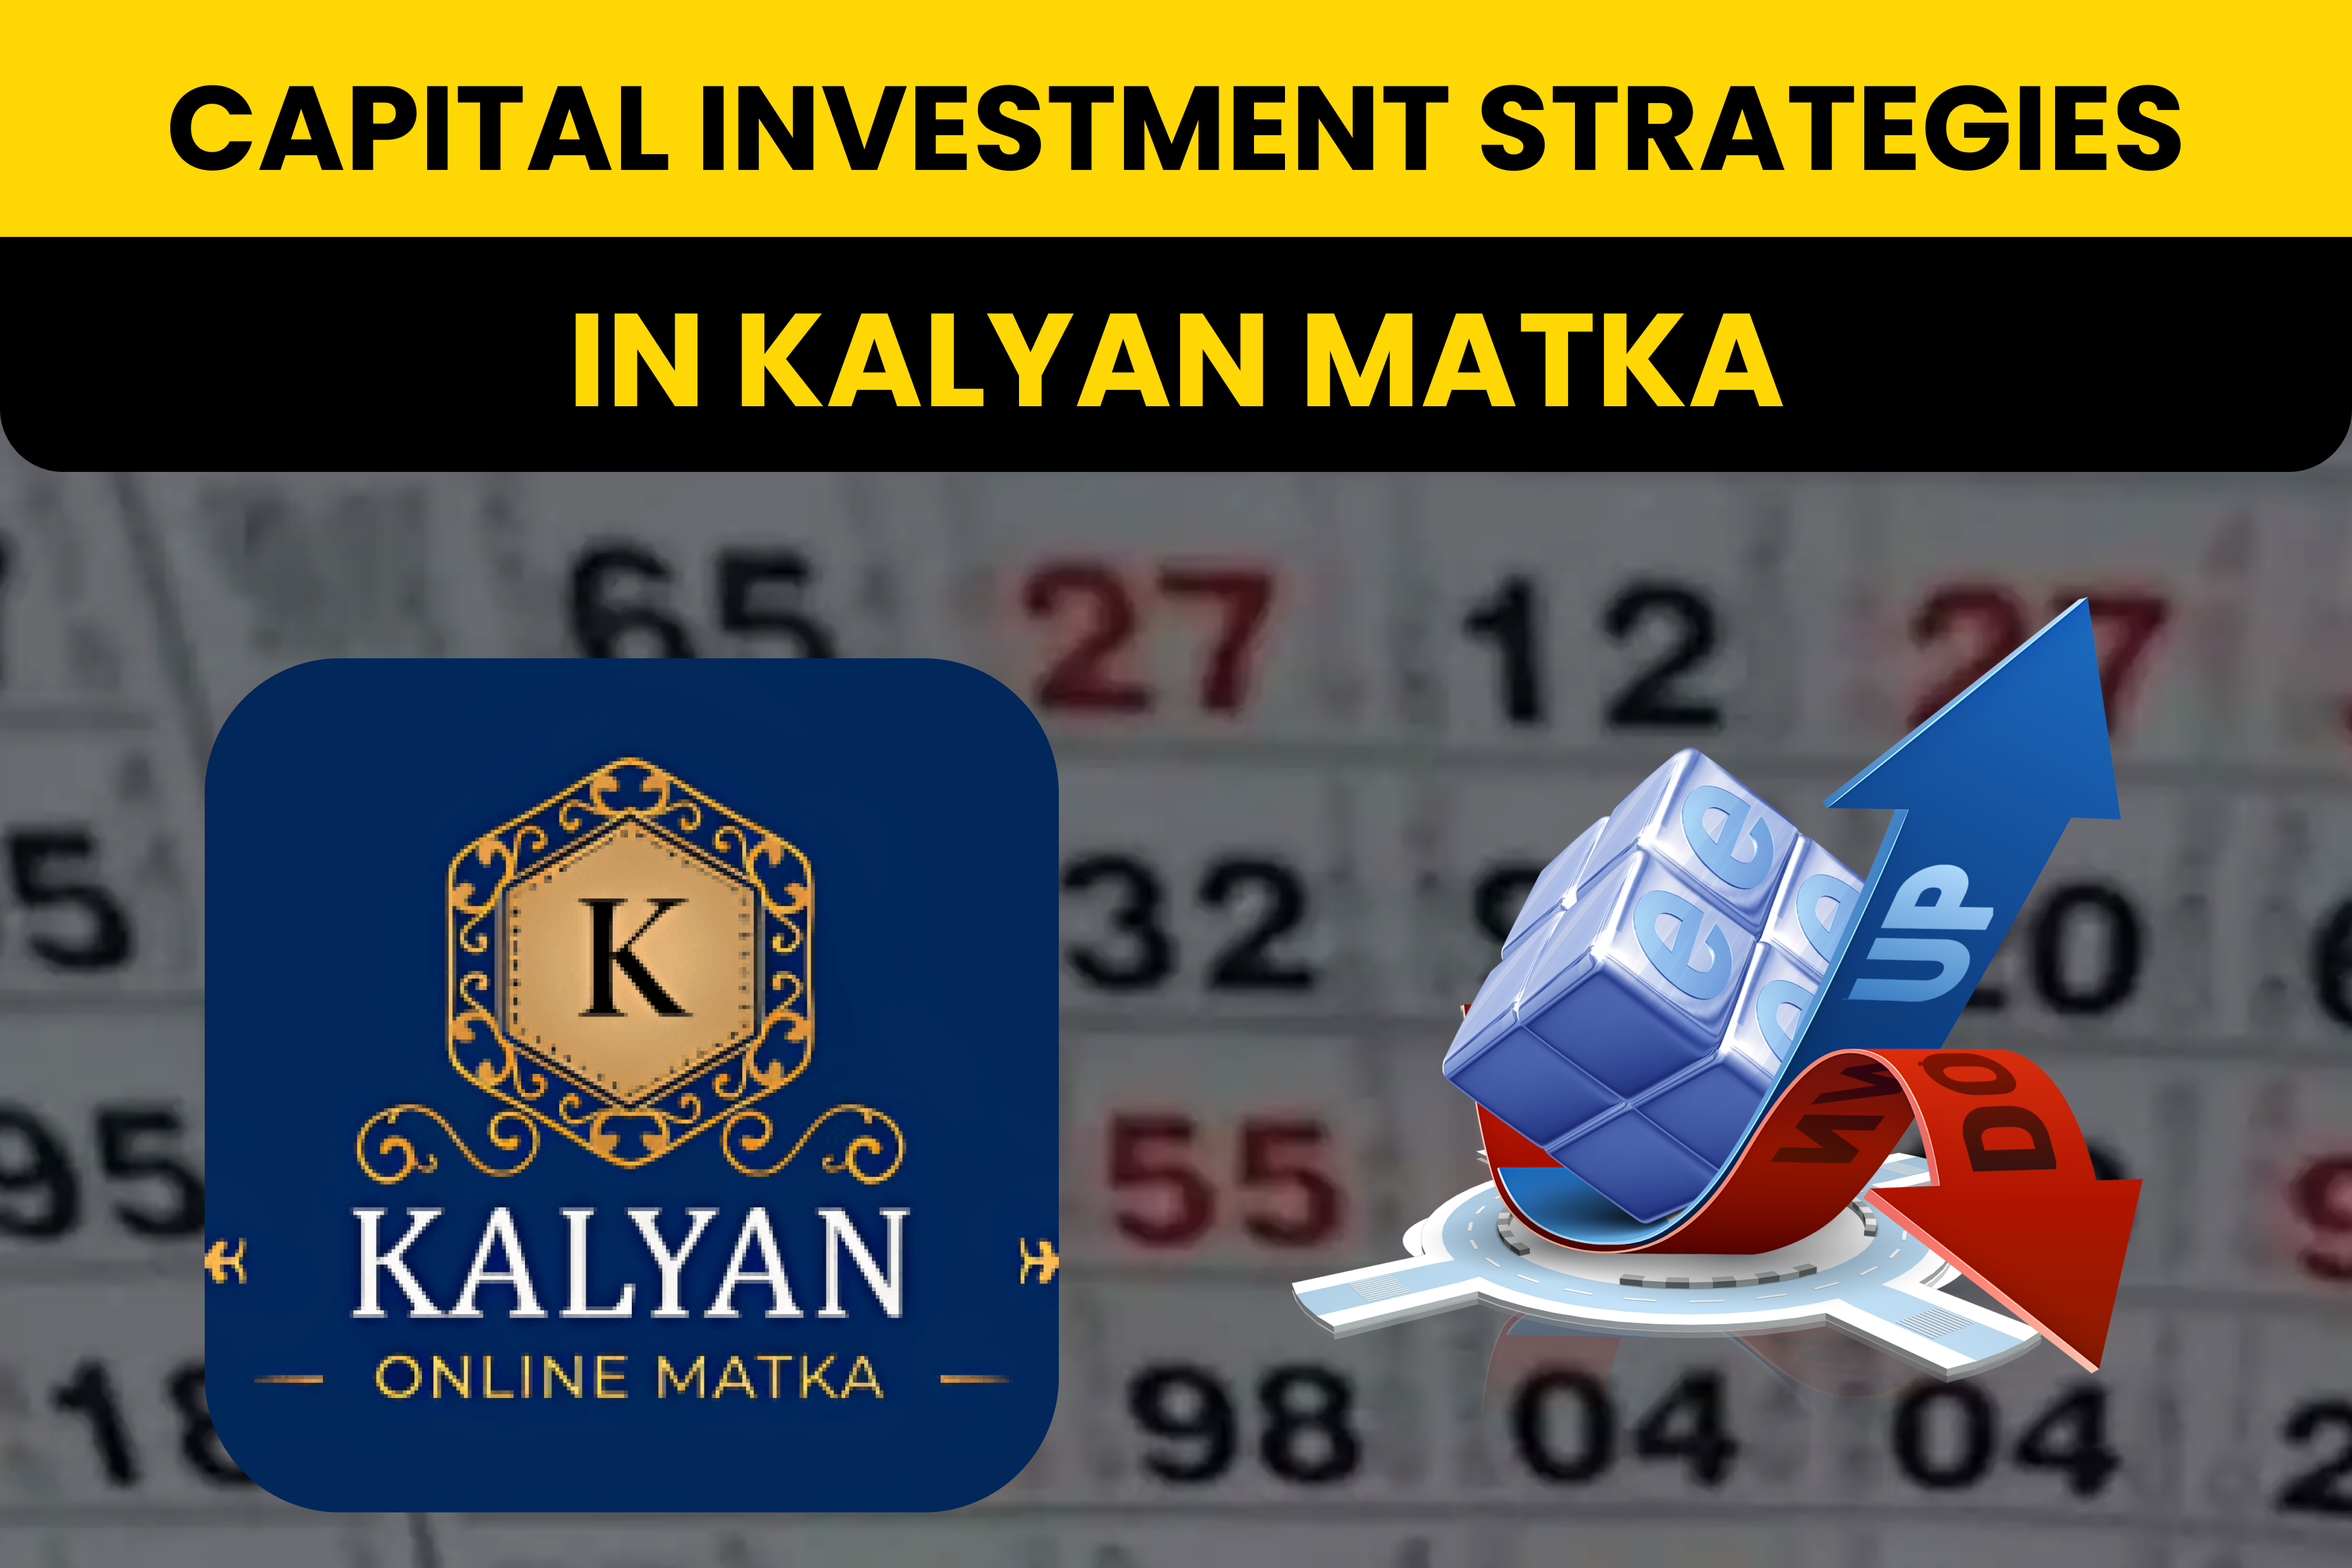 Capital Investment Strategies in Kalyan Matka.